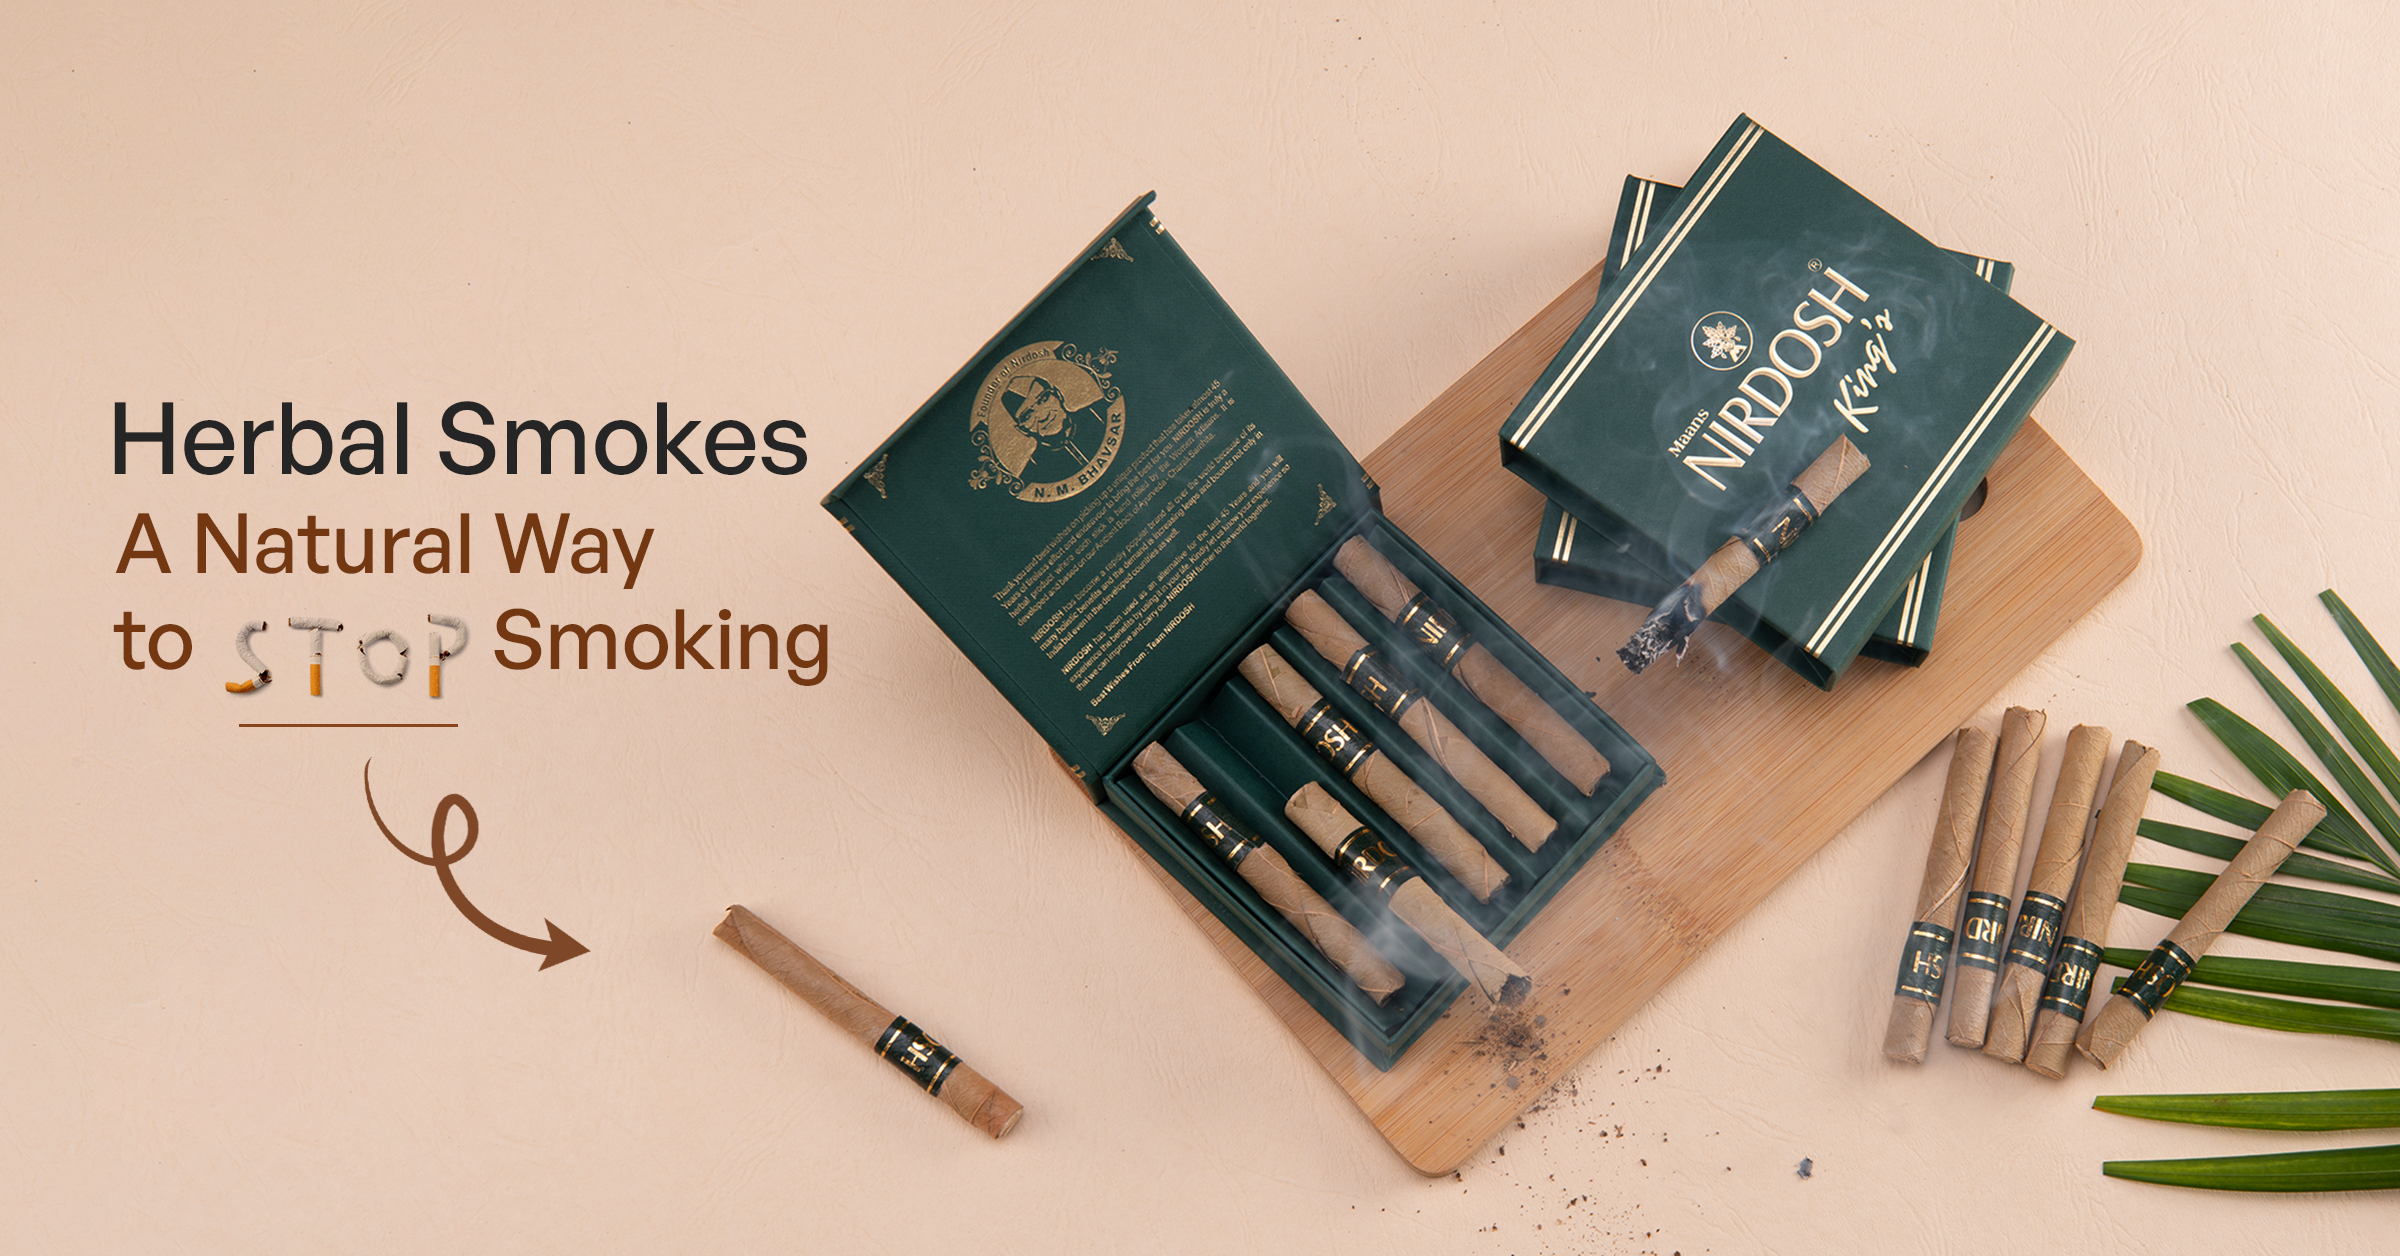 Herbal Smokes: A Natural Way to Stop Smoking